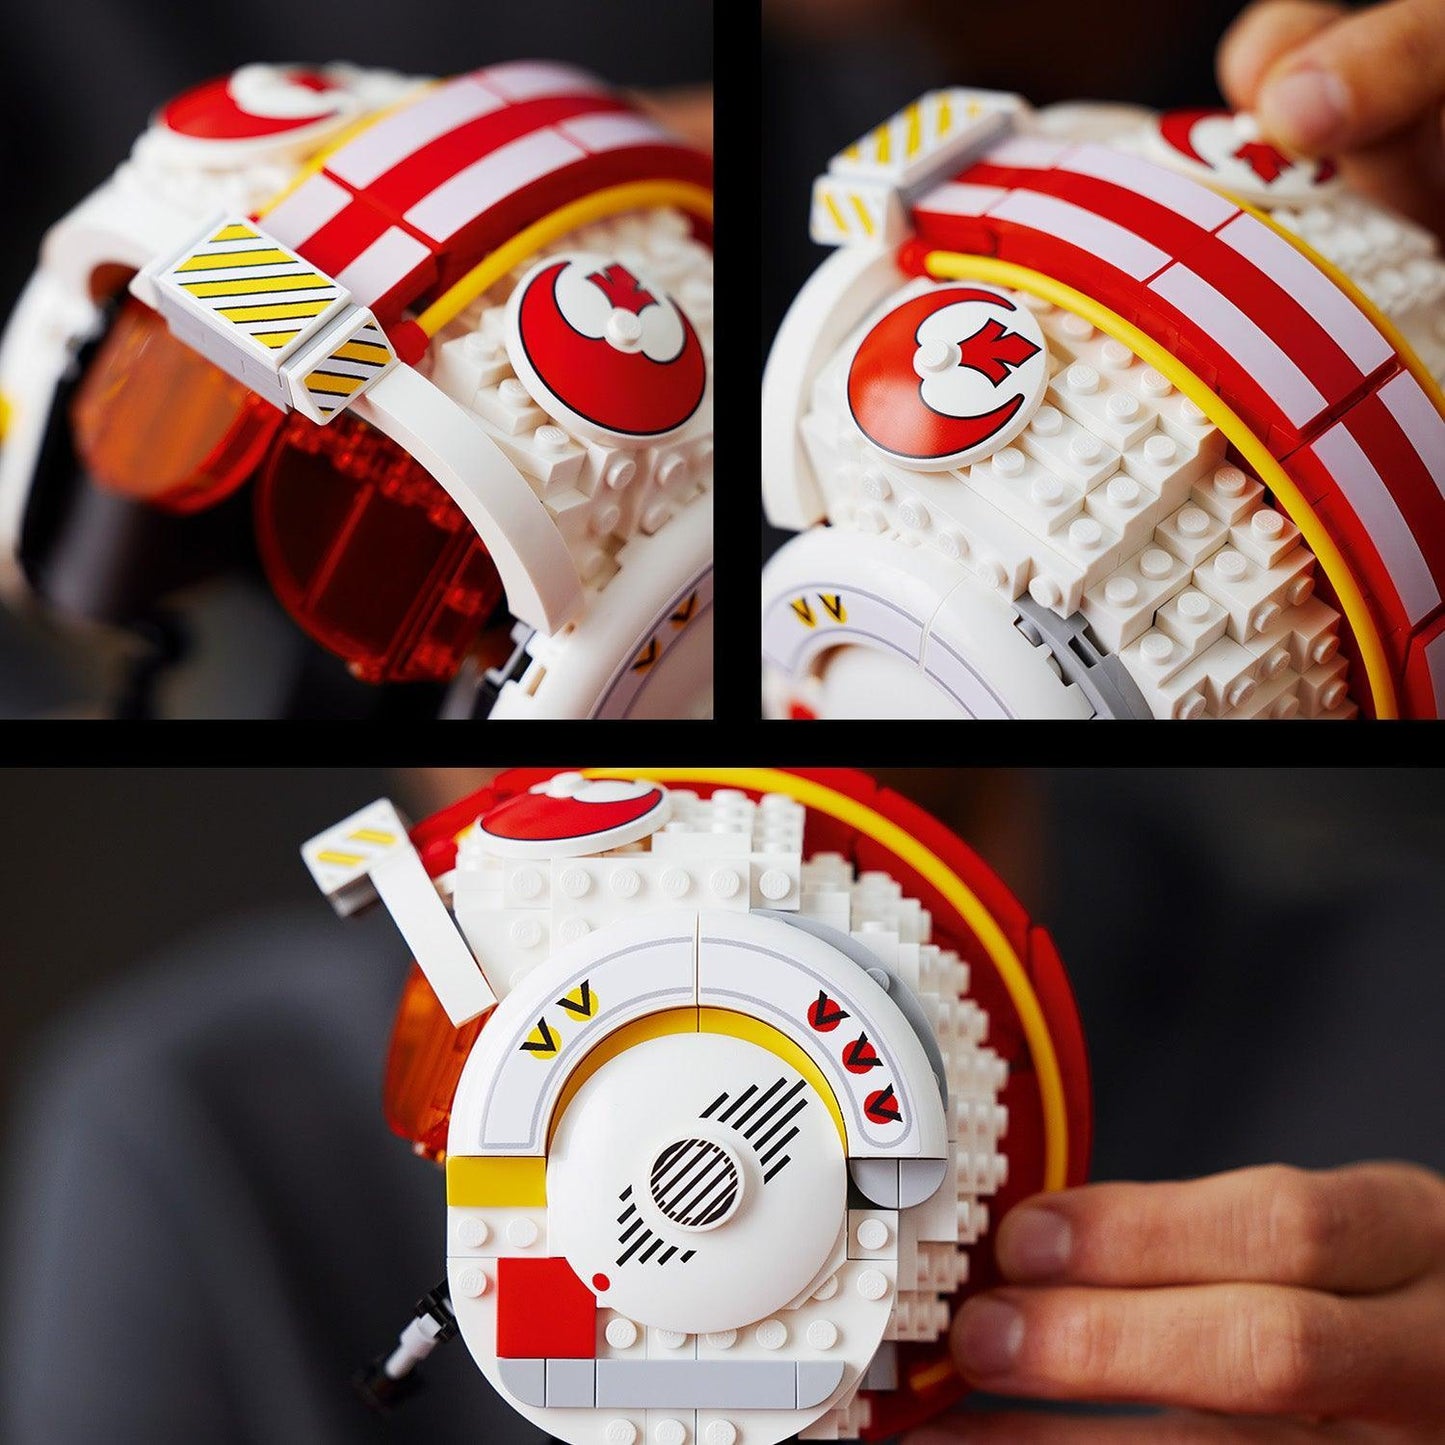 LEGO Luke Skywalker™ (Red Five) helm 75327 StarWars LEGO STARWARS @ 2TTOYS LEGO €. 84.99